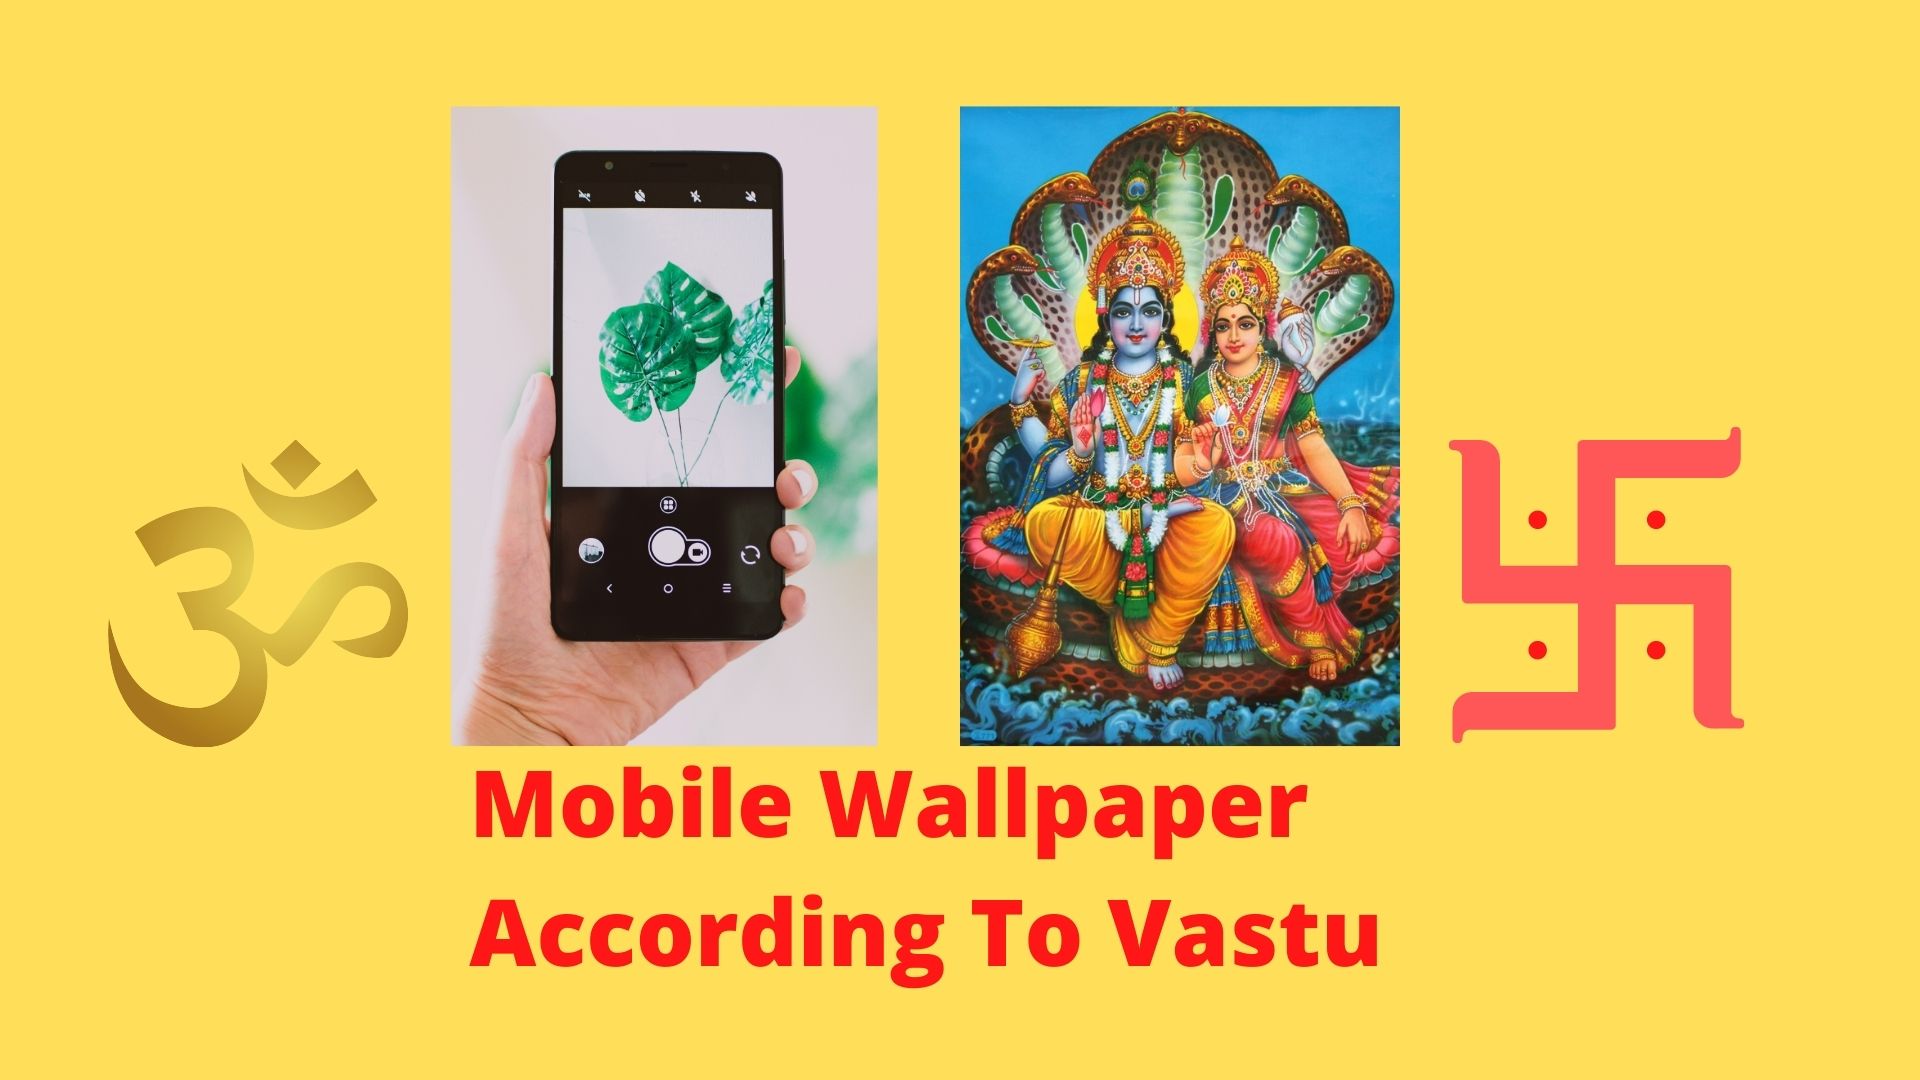 Vastu Mobile Wallpaper: Lucky Mobile Wallpaper According To Vastu